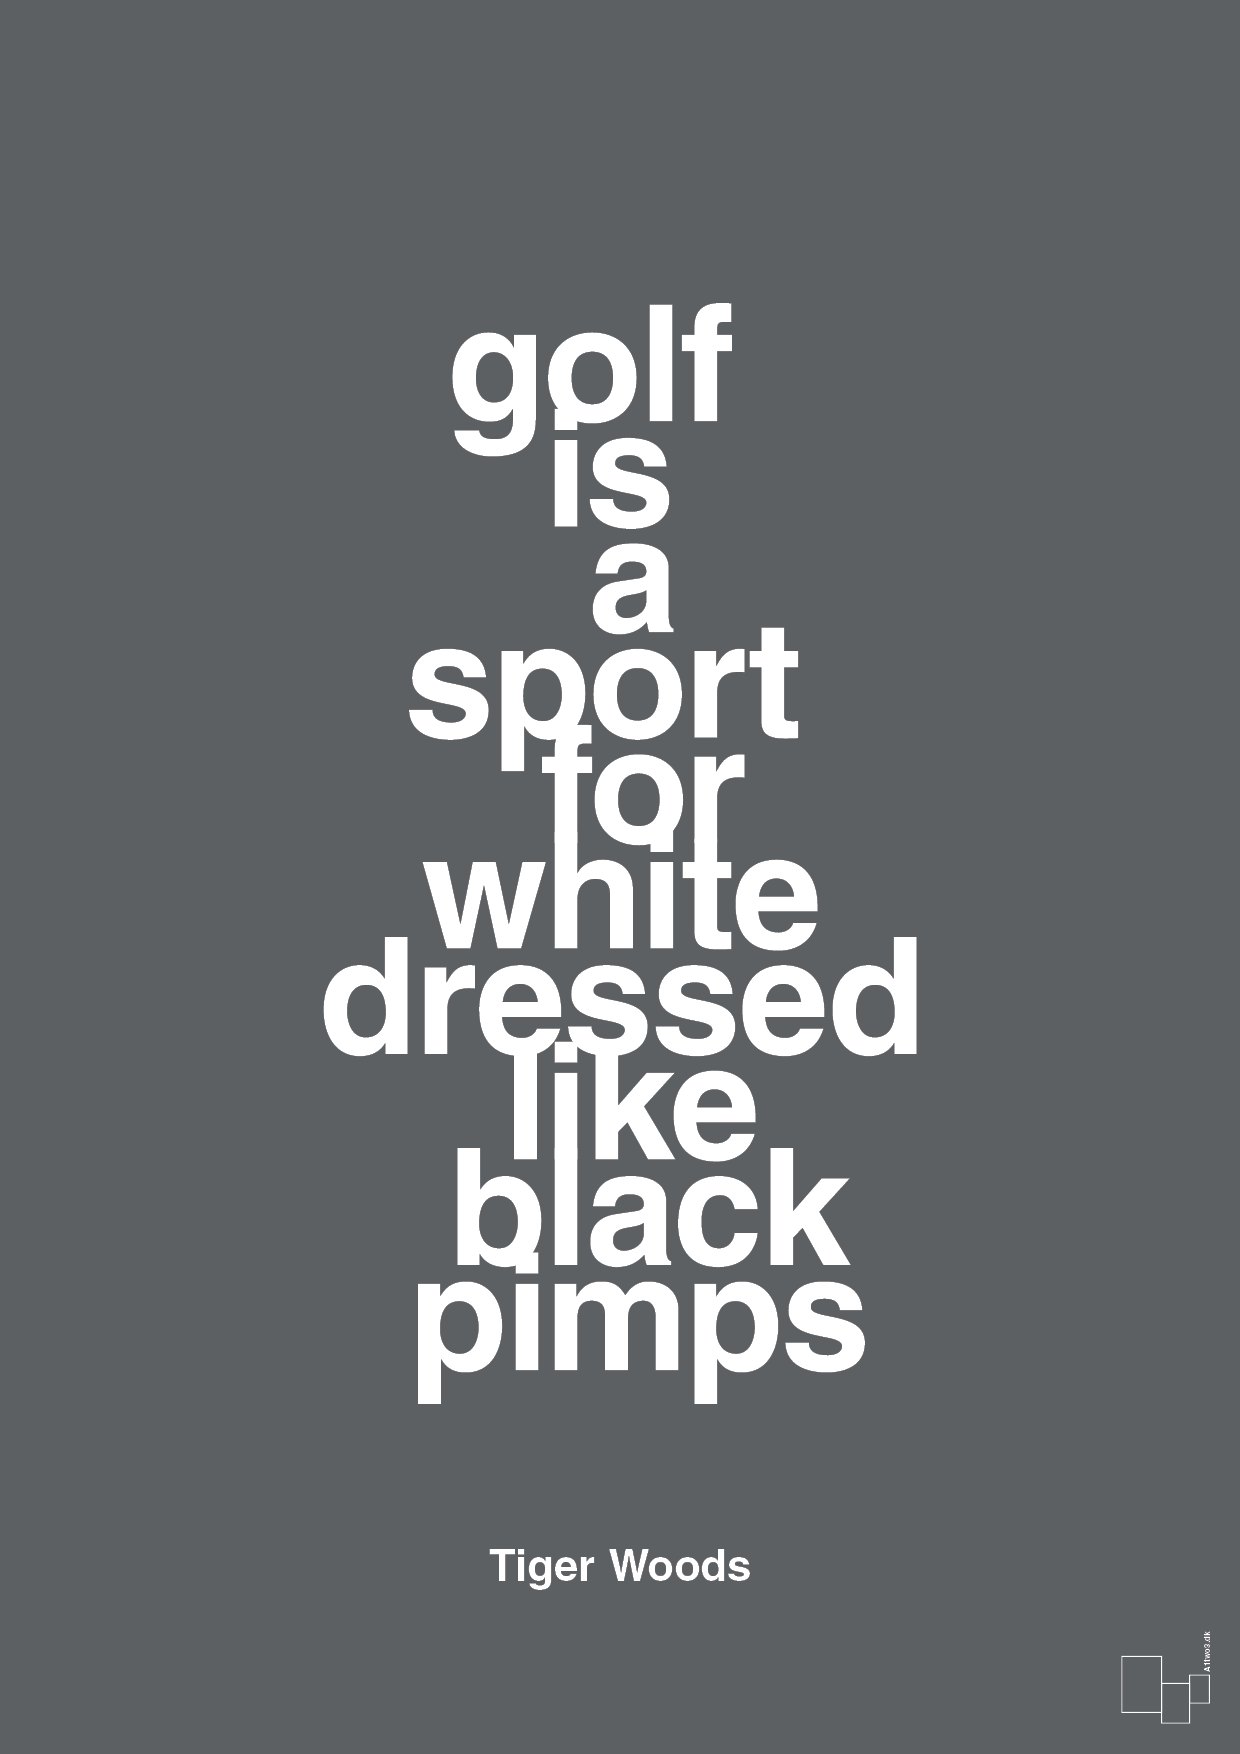 golf is a sport for white men dressed like black pimps - Plakat med Citater i Graphic Charcoal